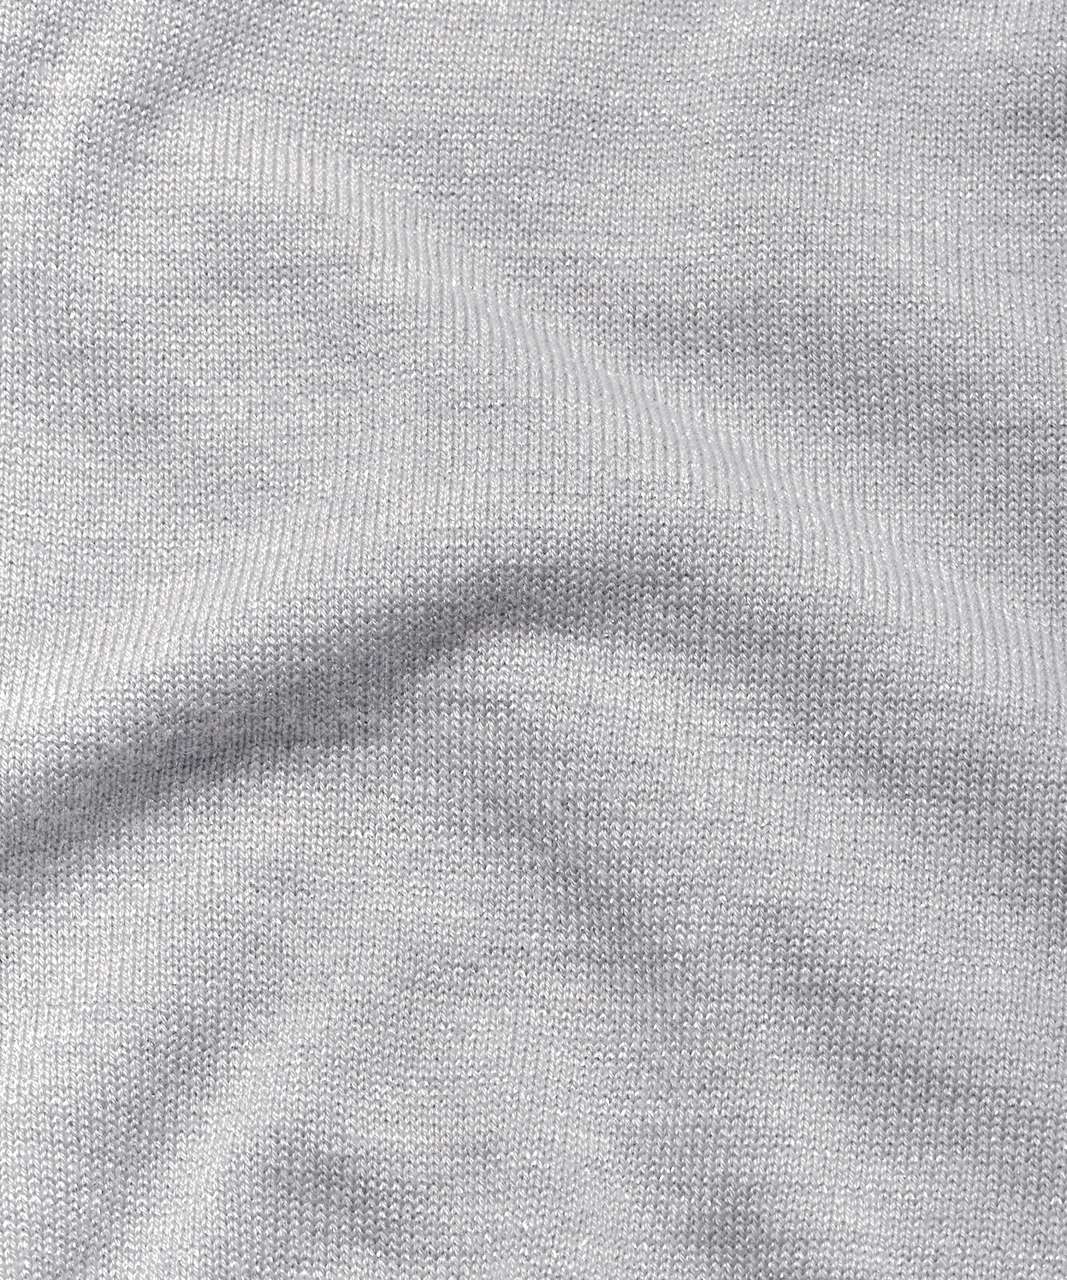 Lululemon Soft Shine Sweater - Heathered Silver Drop / Antique Silver